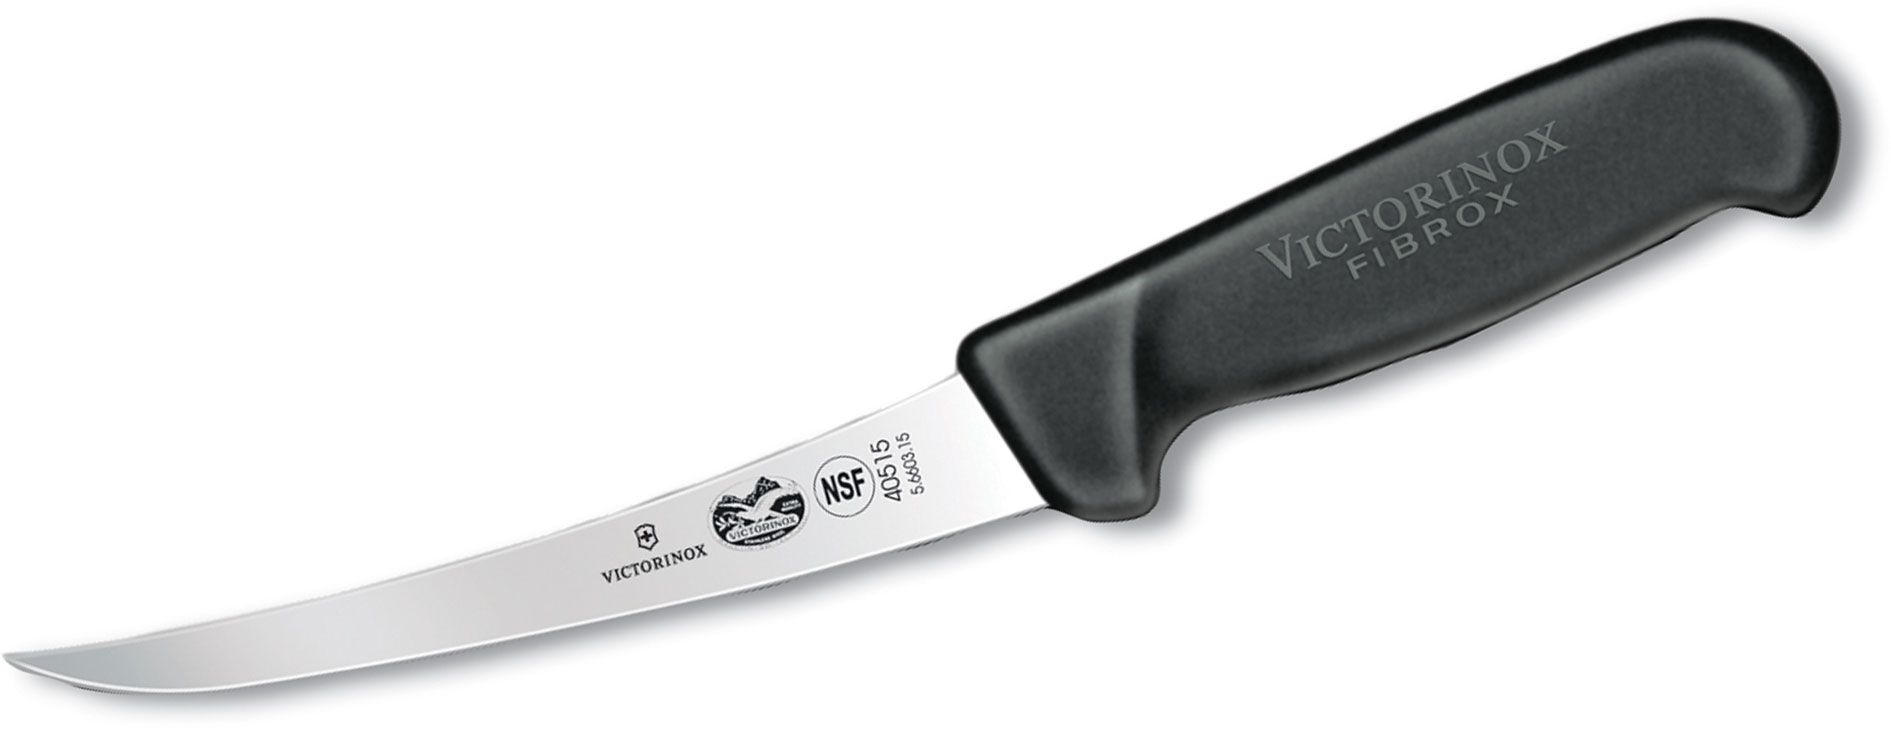 https://ferrariandsons.com/wp-content/uploads/2009/05/Forshner-6-IN-Fibrox-Boning-Knife-Curved-Flexible.jpg